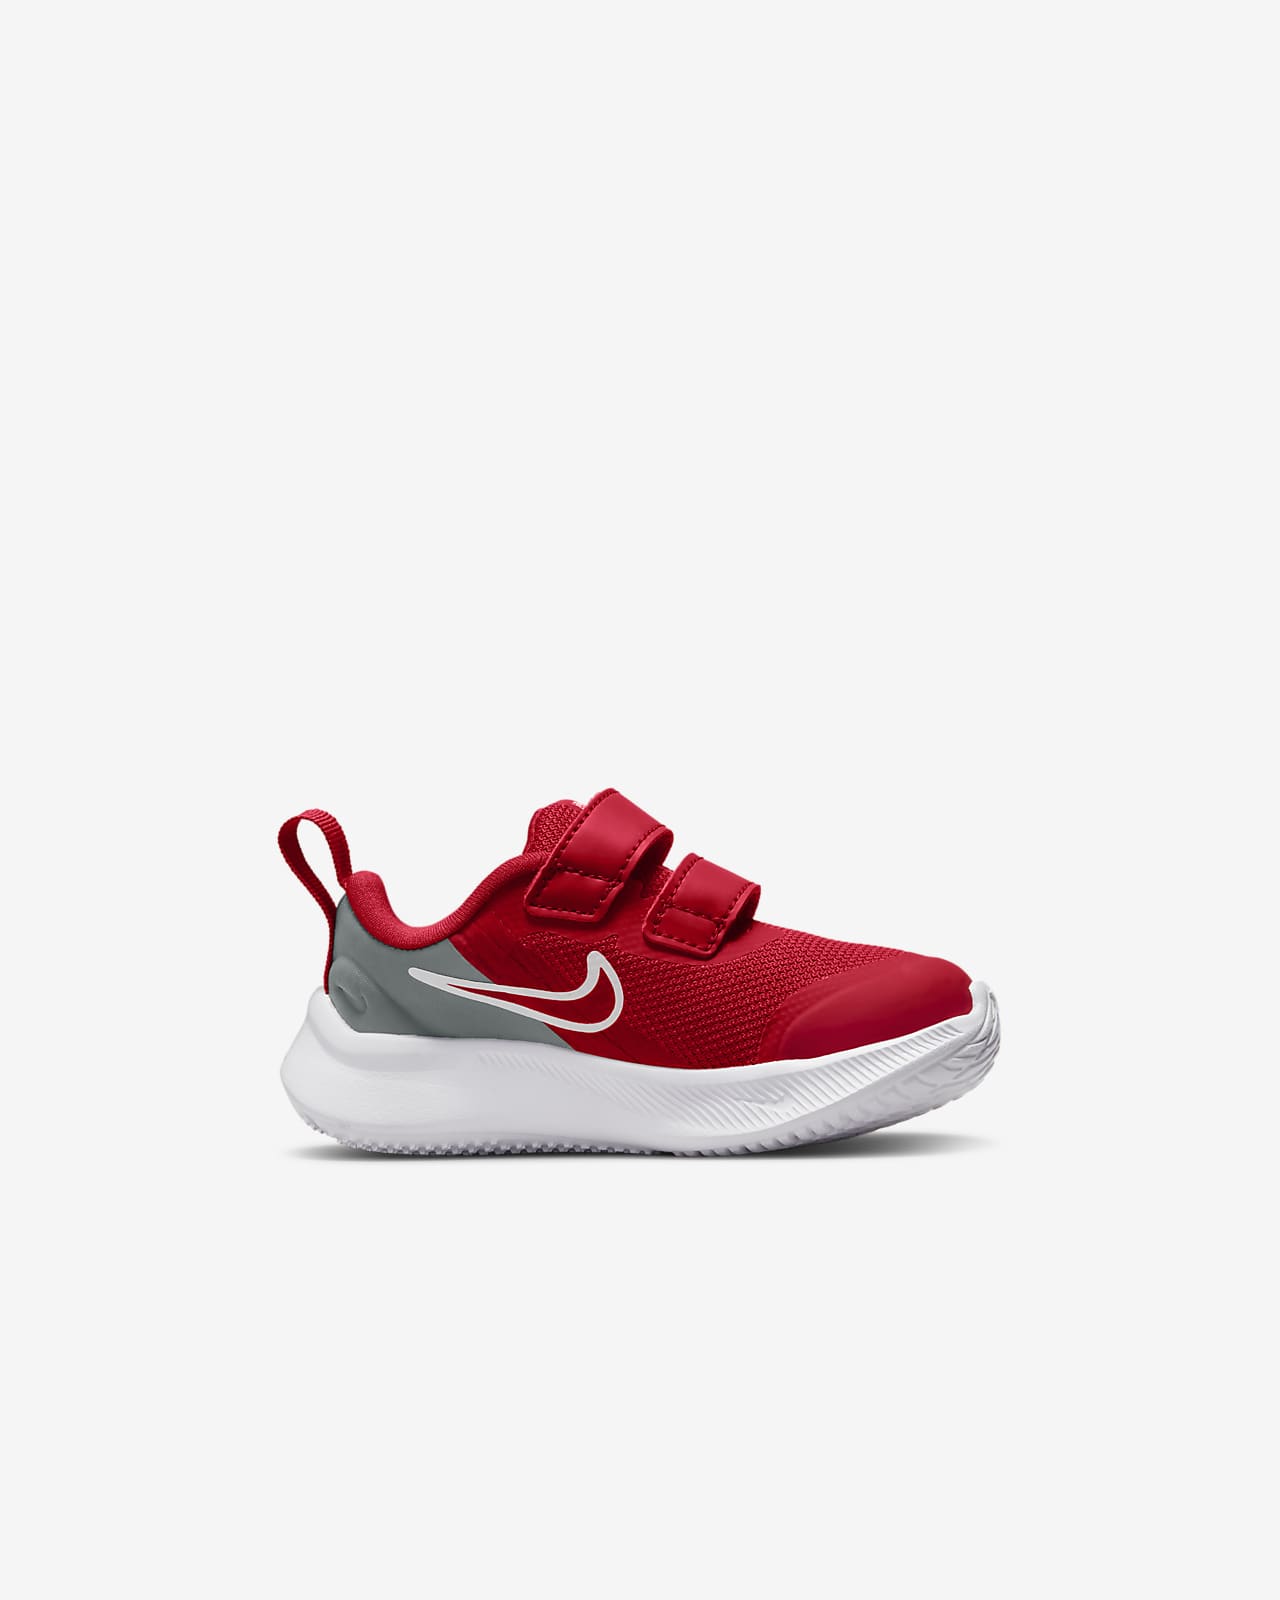 Nike Star Runner 3 Baby/Toddler Shoes